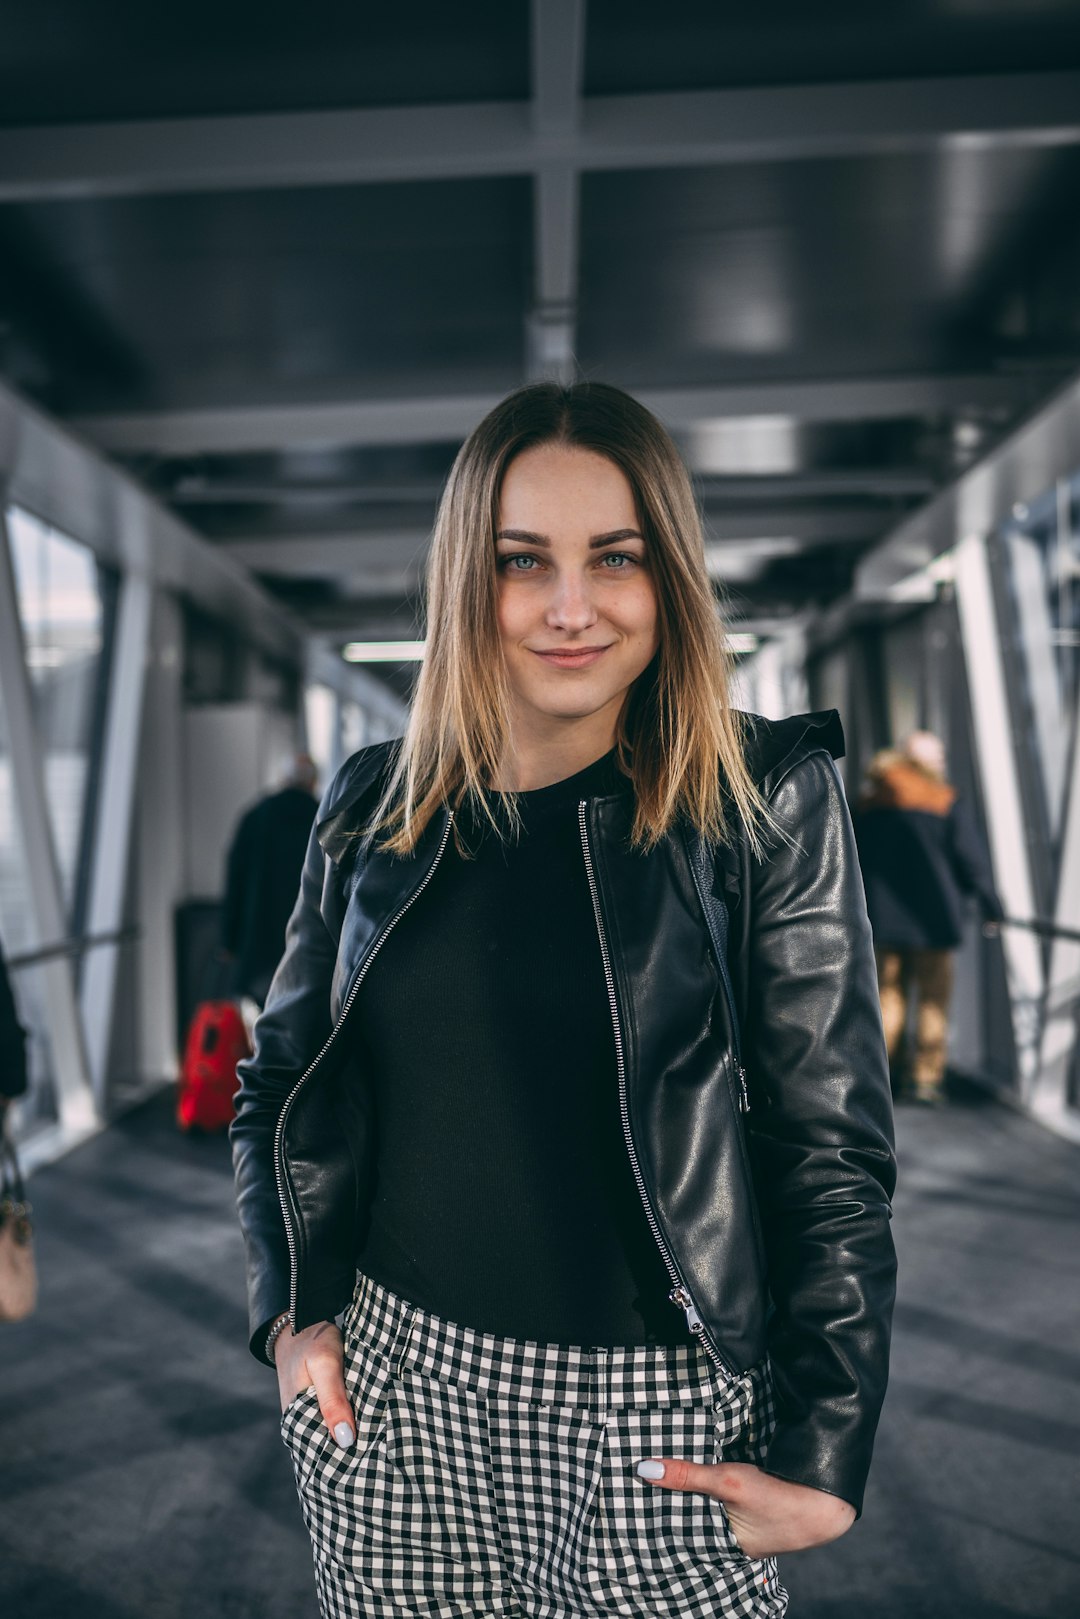 woman standing on catwalk bridge wearing black leather jacket